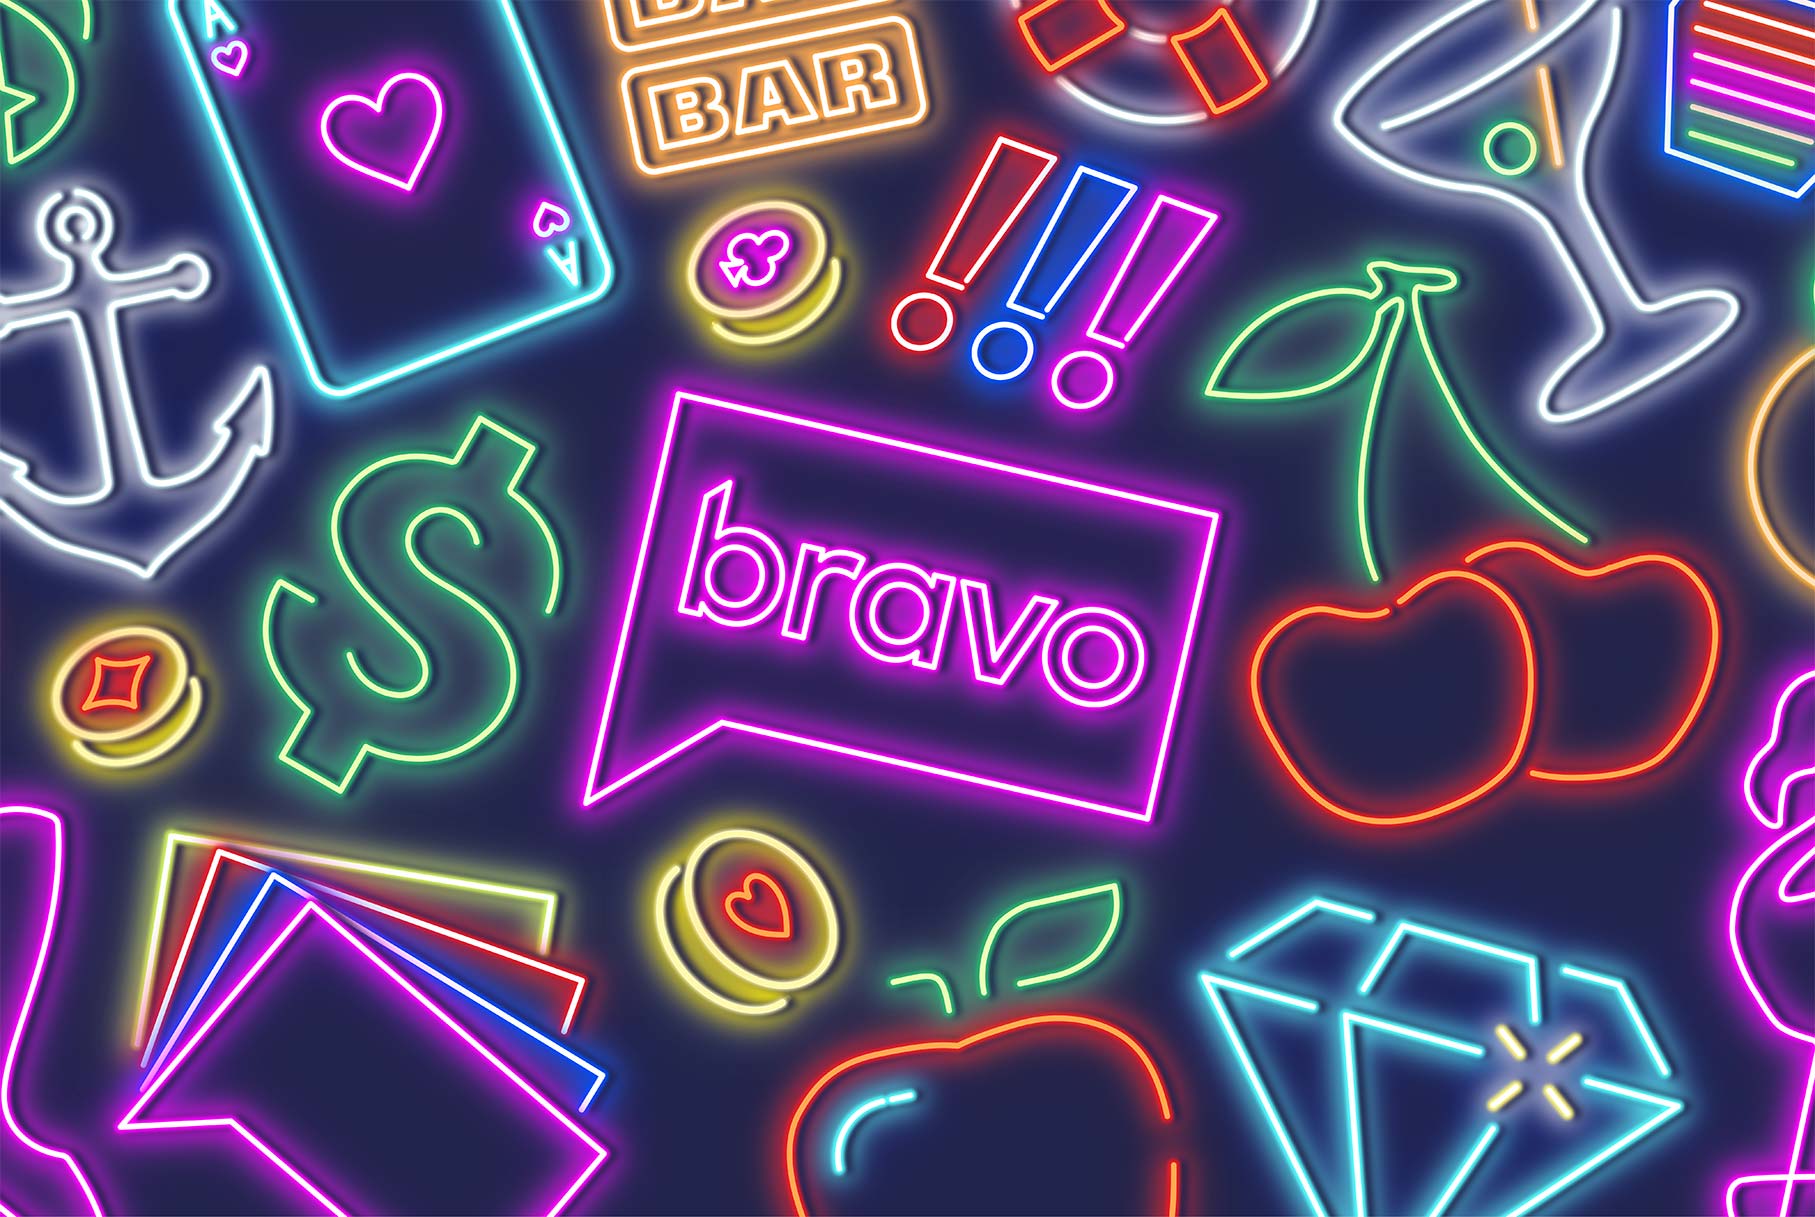 Bravo logo in neon with other Las Vegas and Bravo symbols